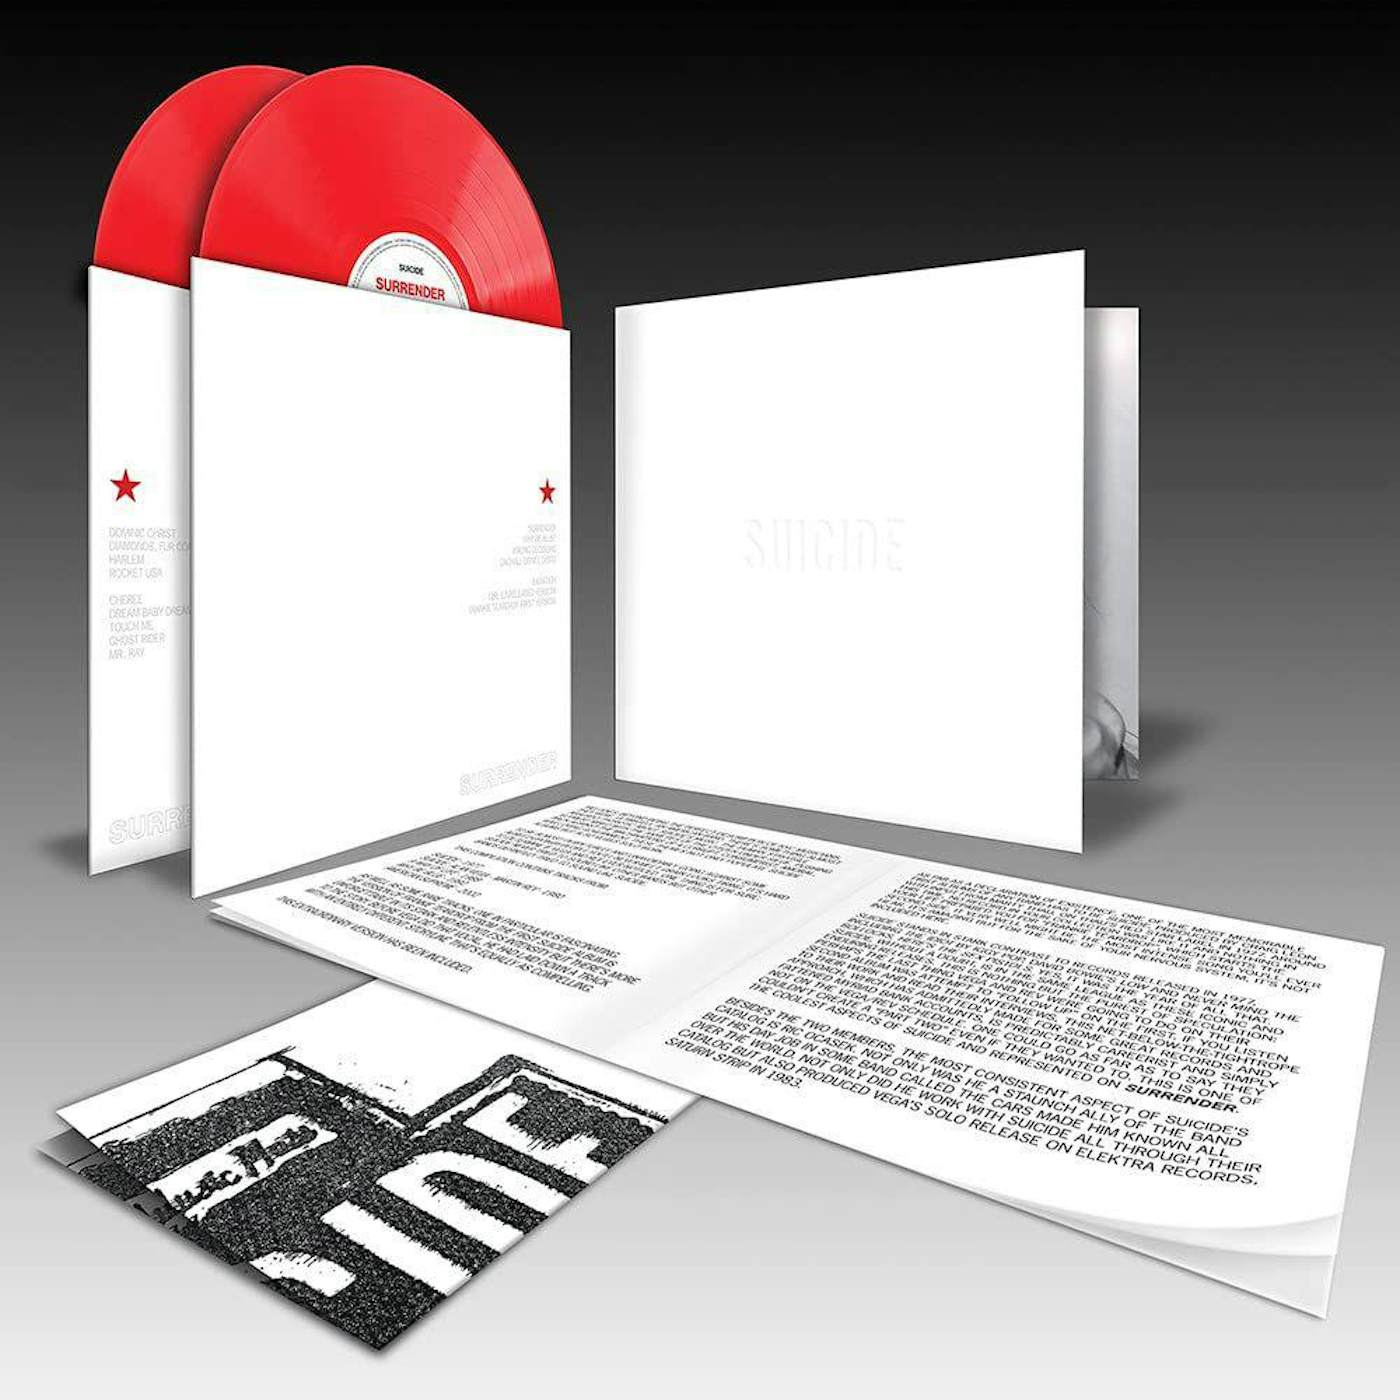 Television: Marquee Moon (180g) Vinyl LP —